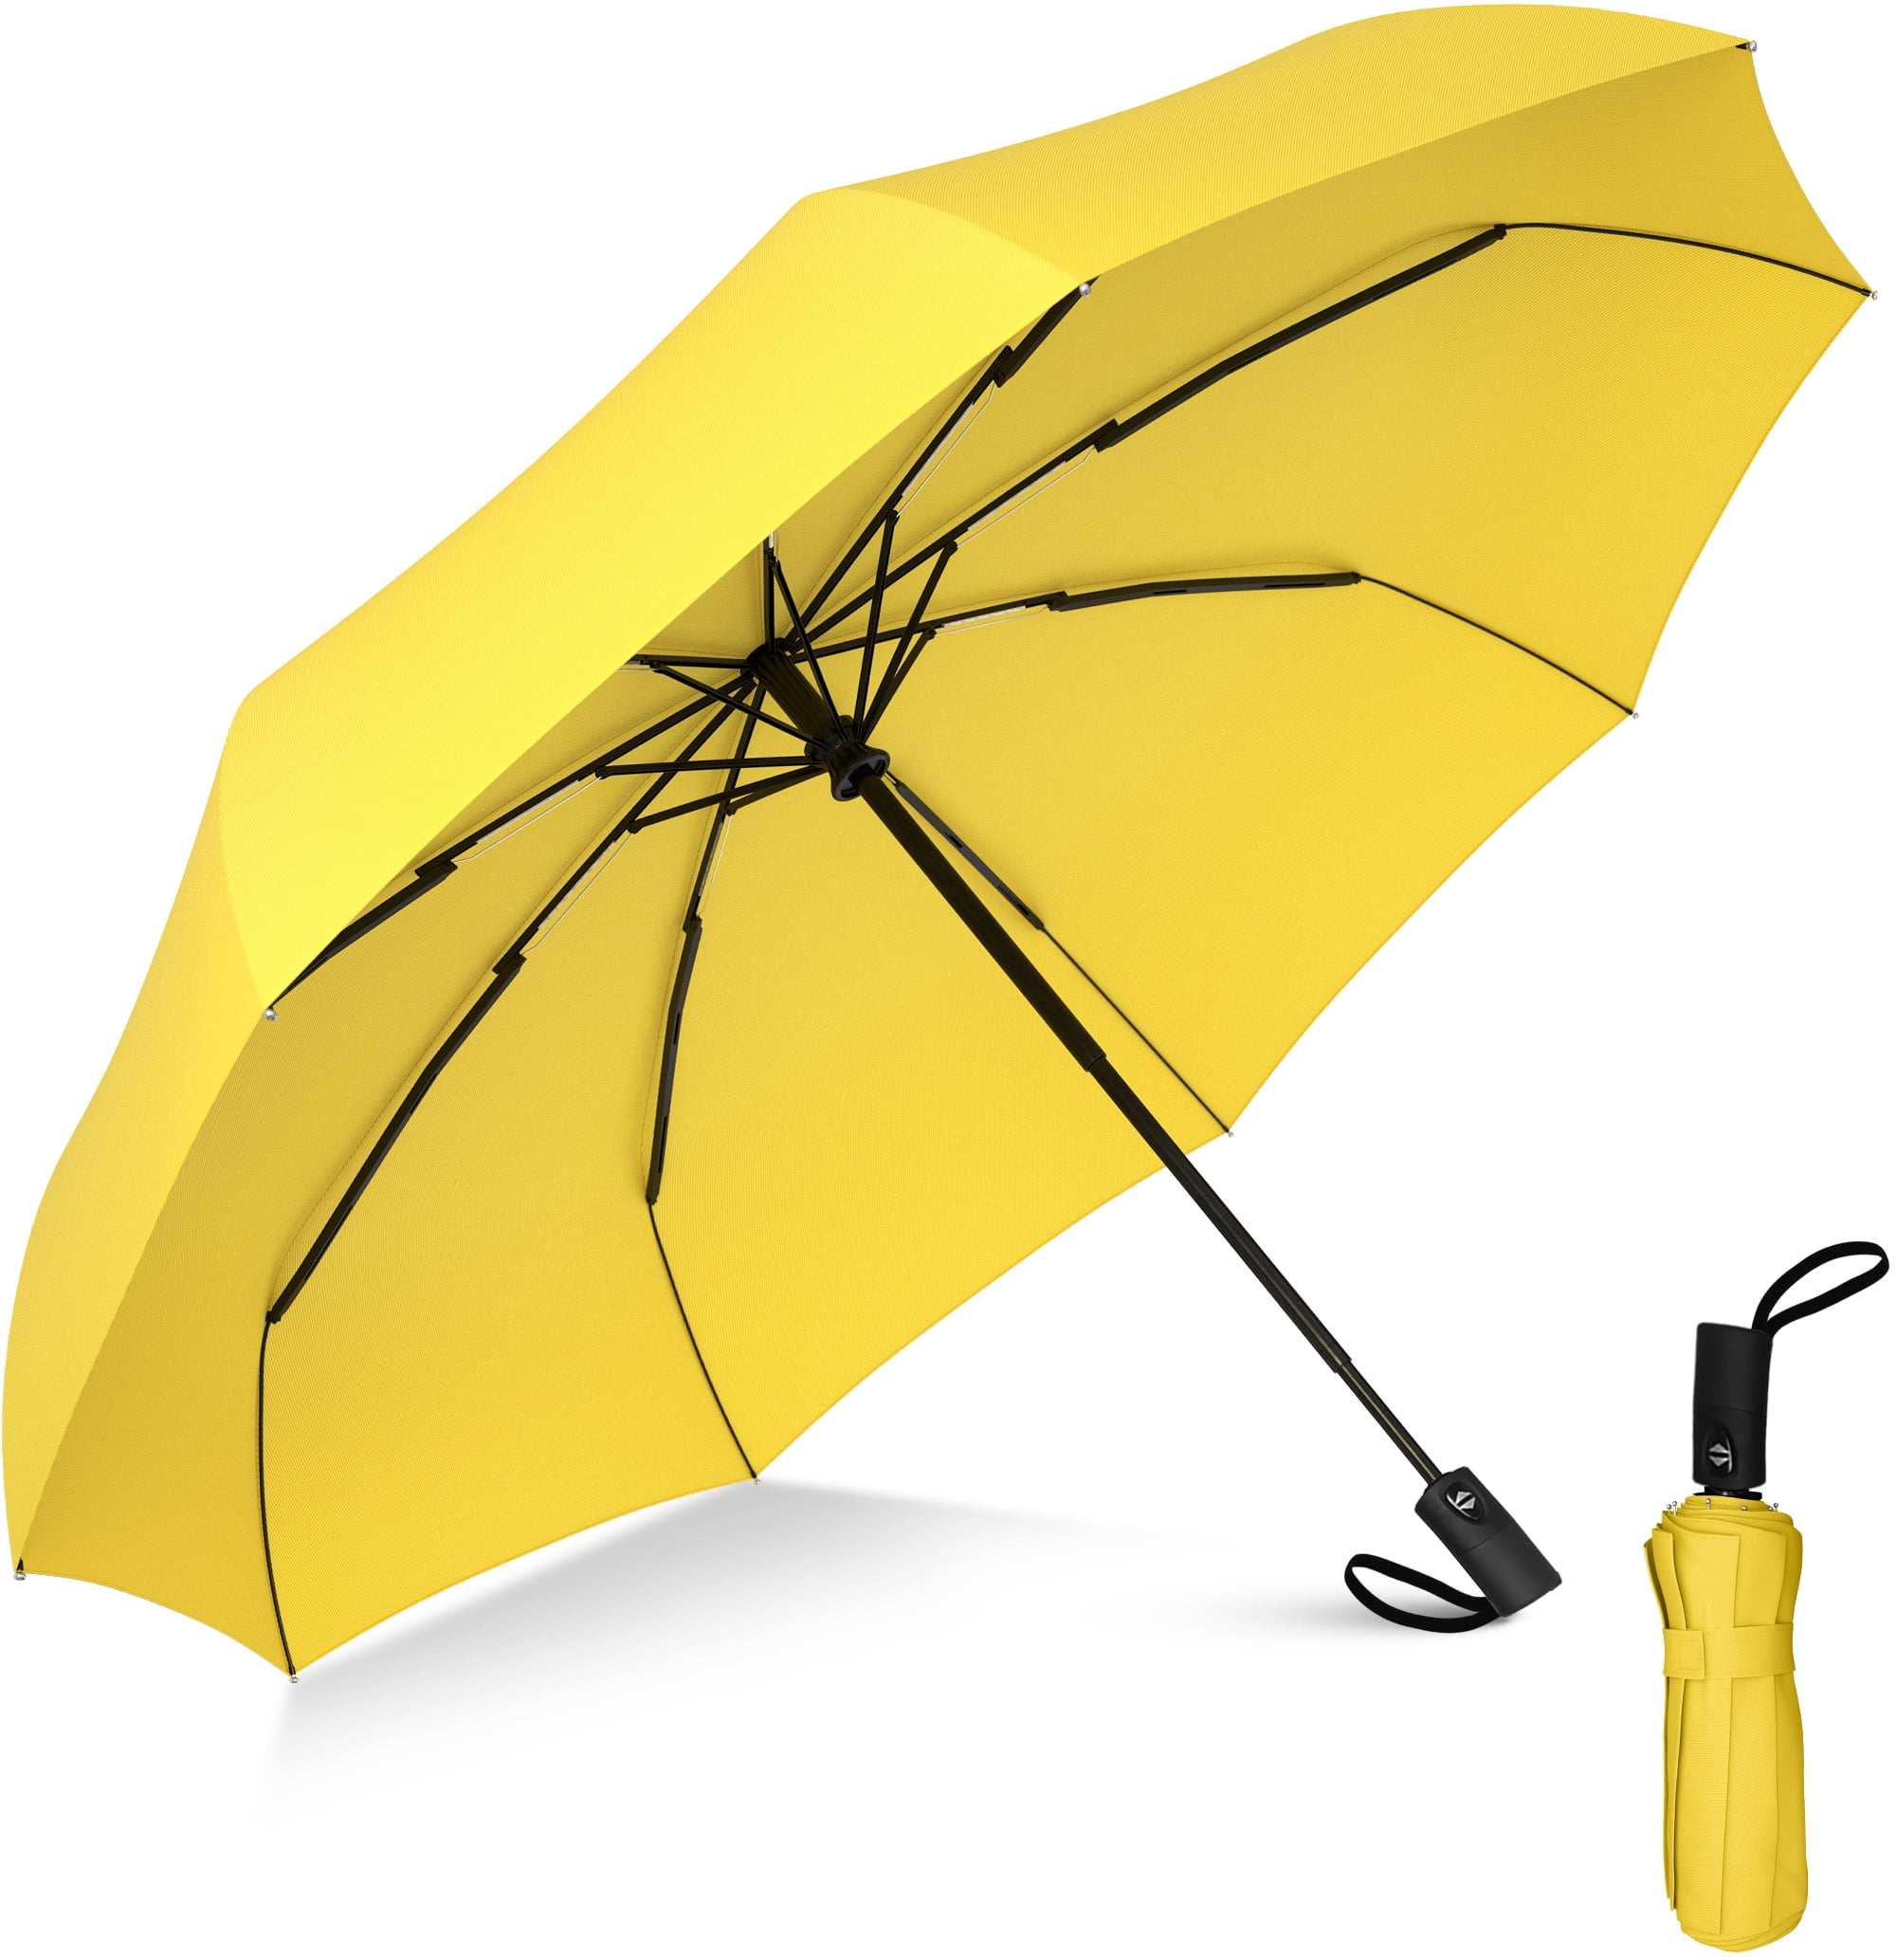 KUD 42 inch Arc Compact Lightweight Auto-open umbrella 